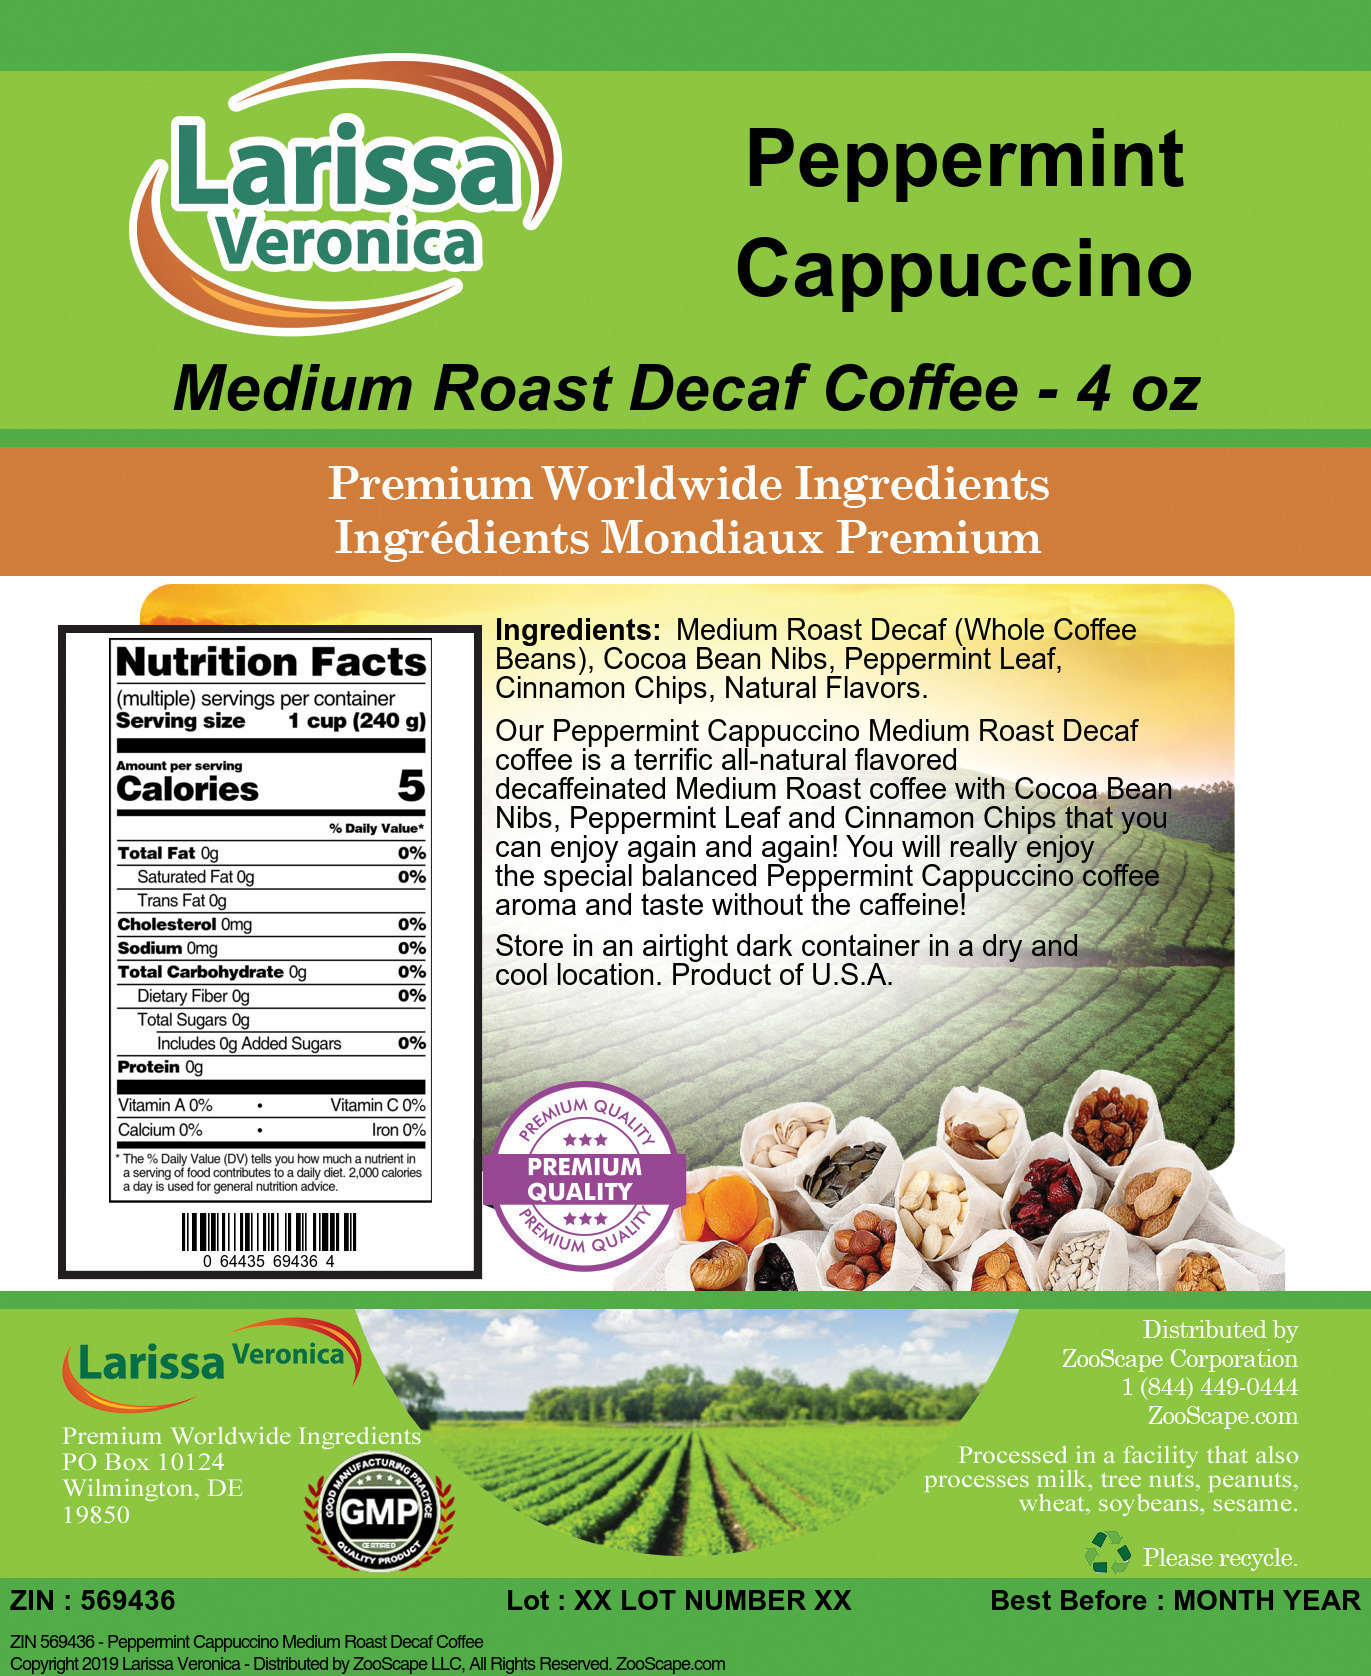 Peppermint Cappuccino Medium Roast Decaf Coffee - Label